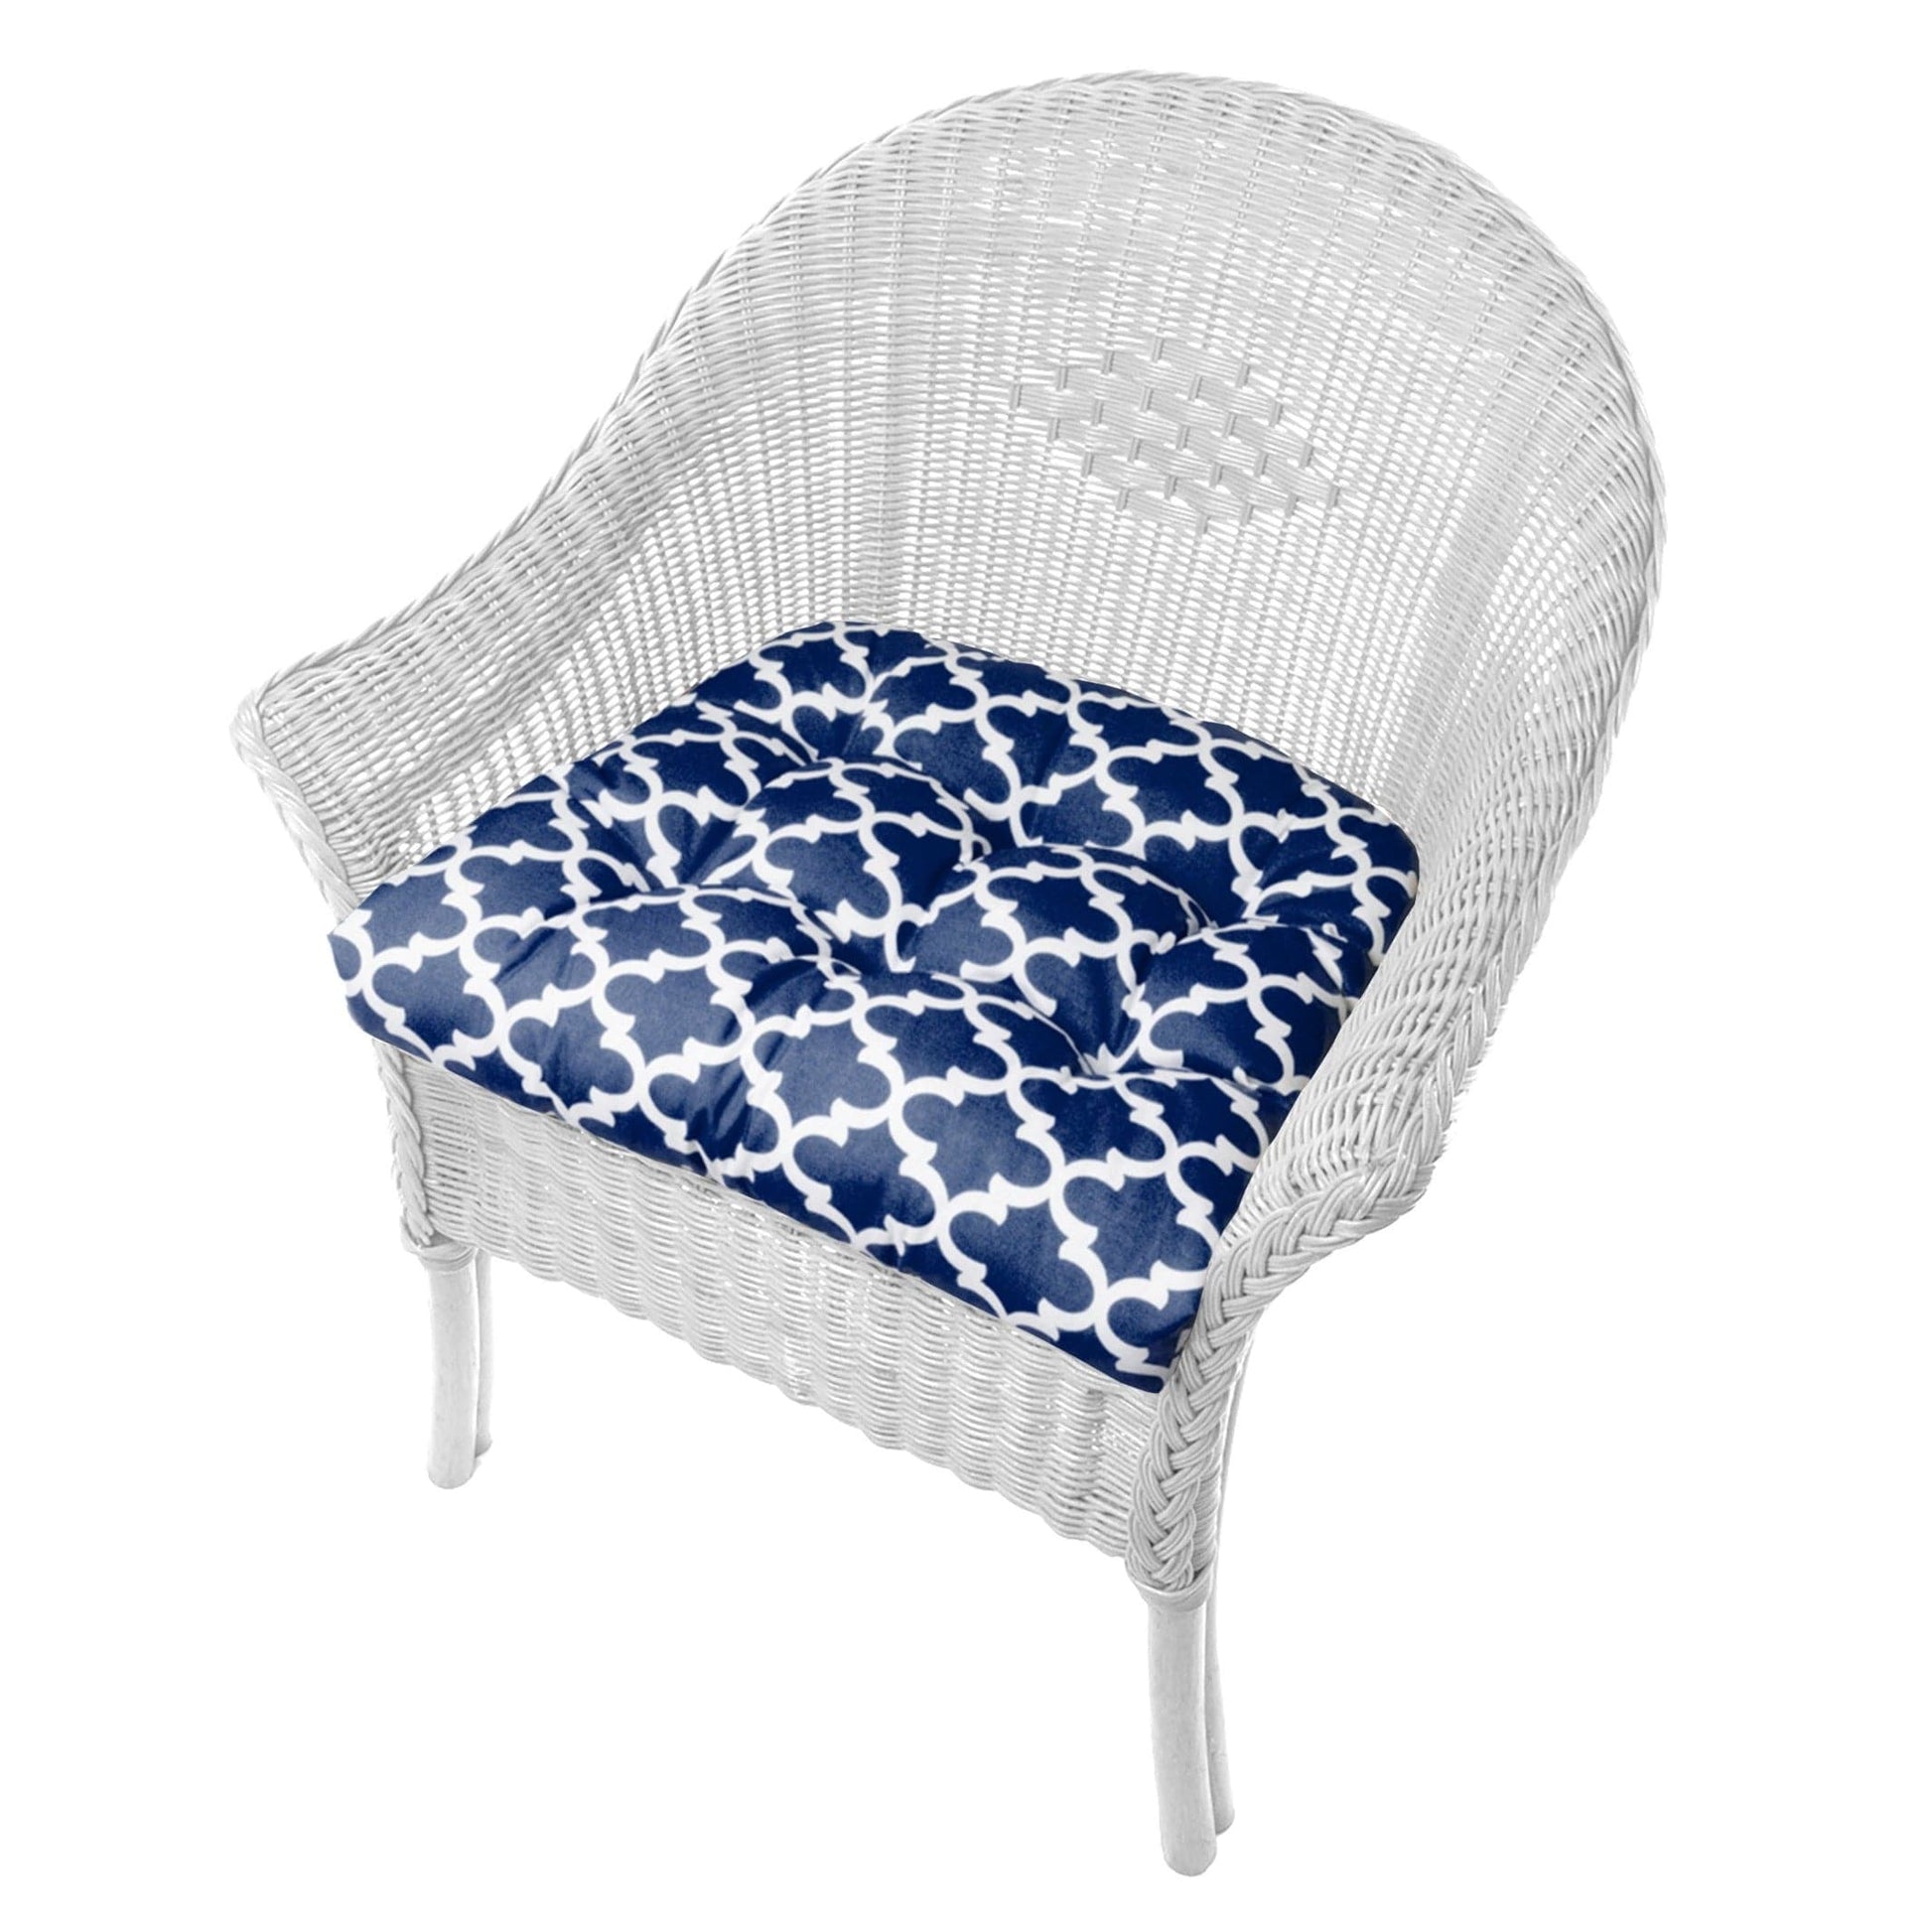 Fulton Navy Wicker Chair Cushions - Barnett Home Décor - Blue and White